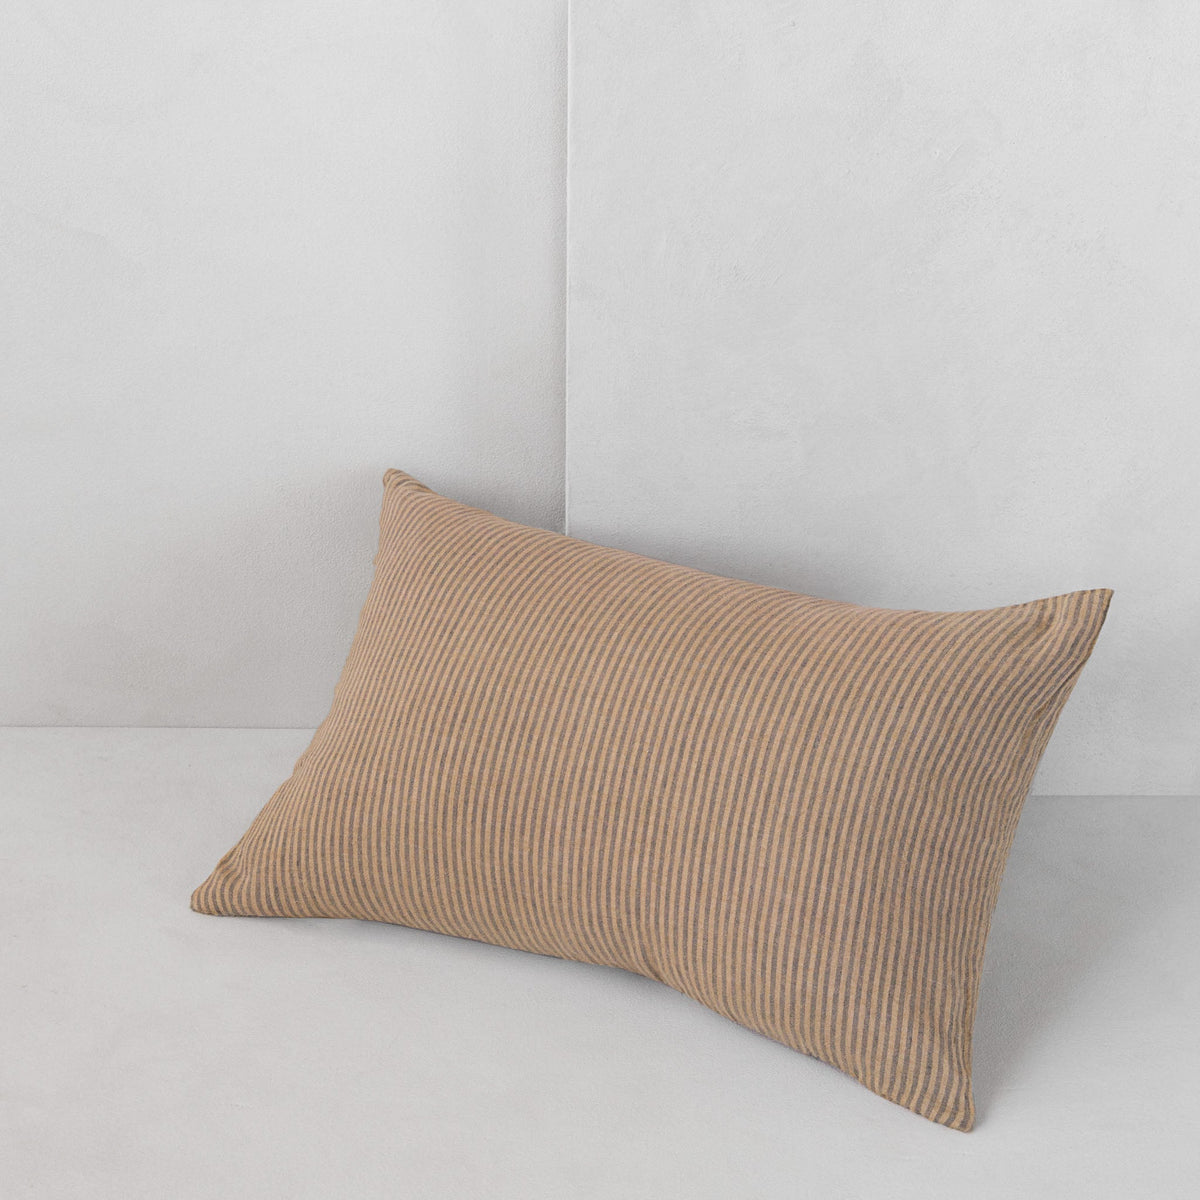 Basix Stripe Linen Pillow - Carmel/Tempest